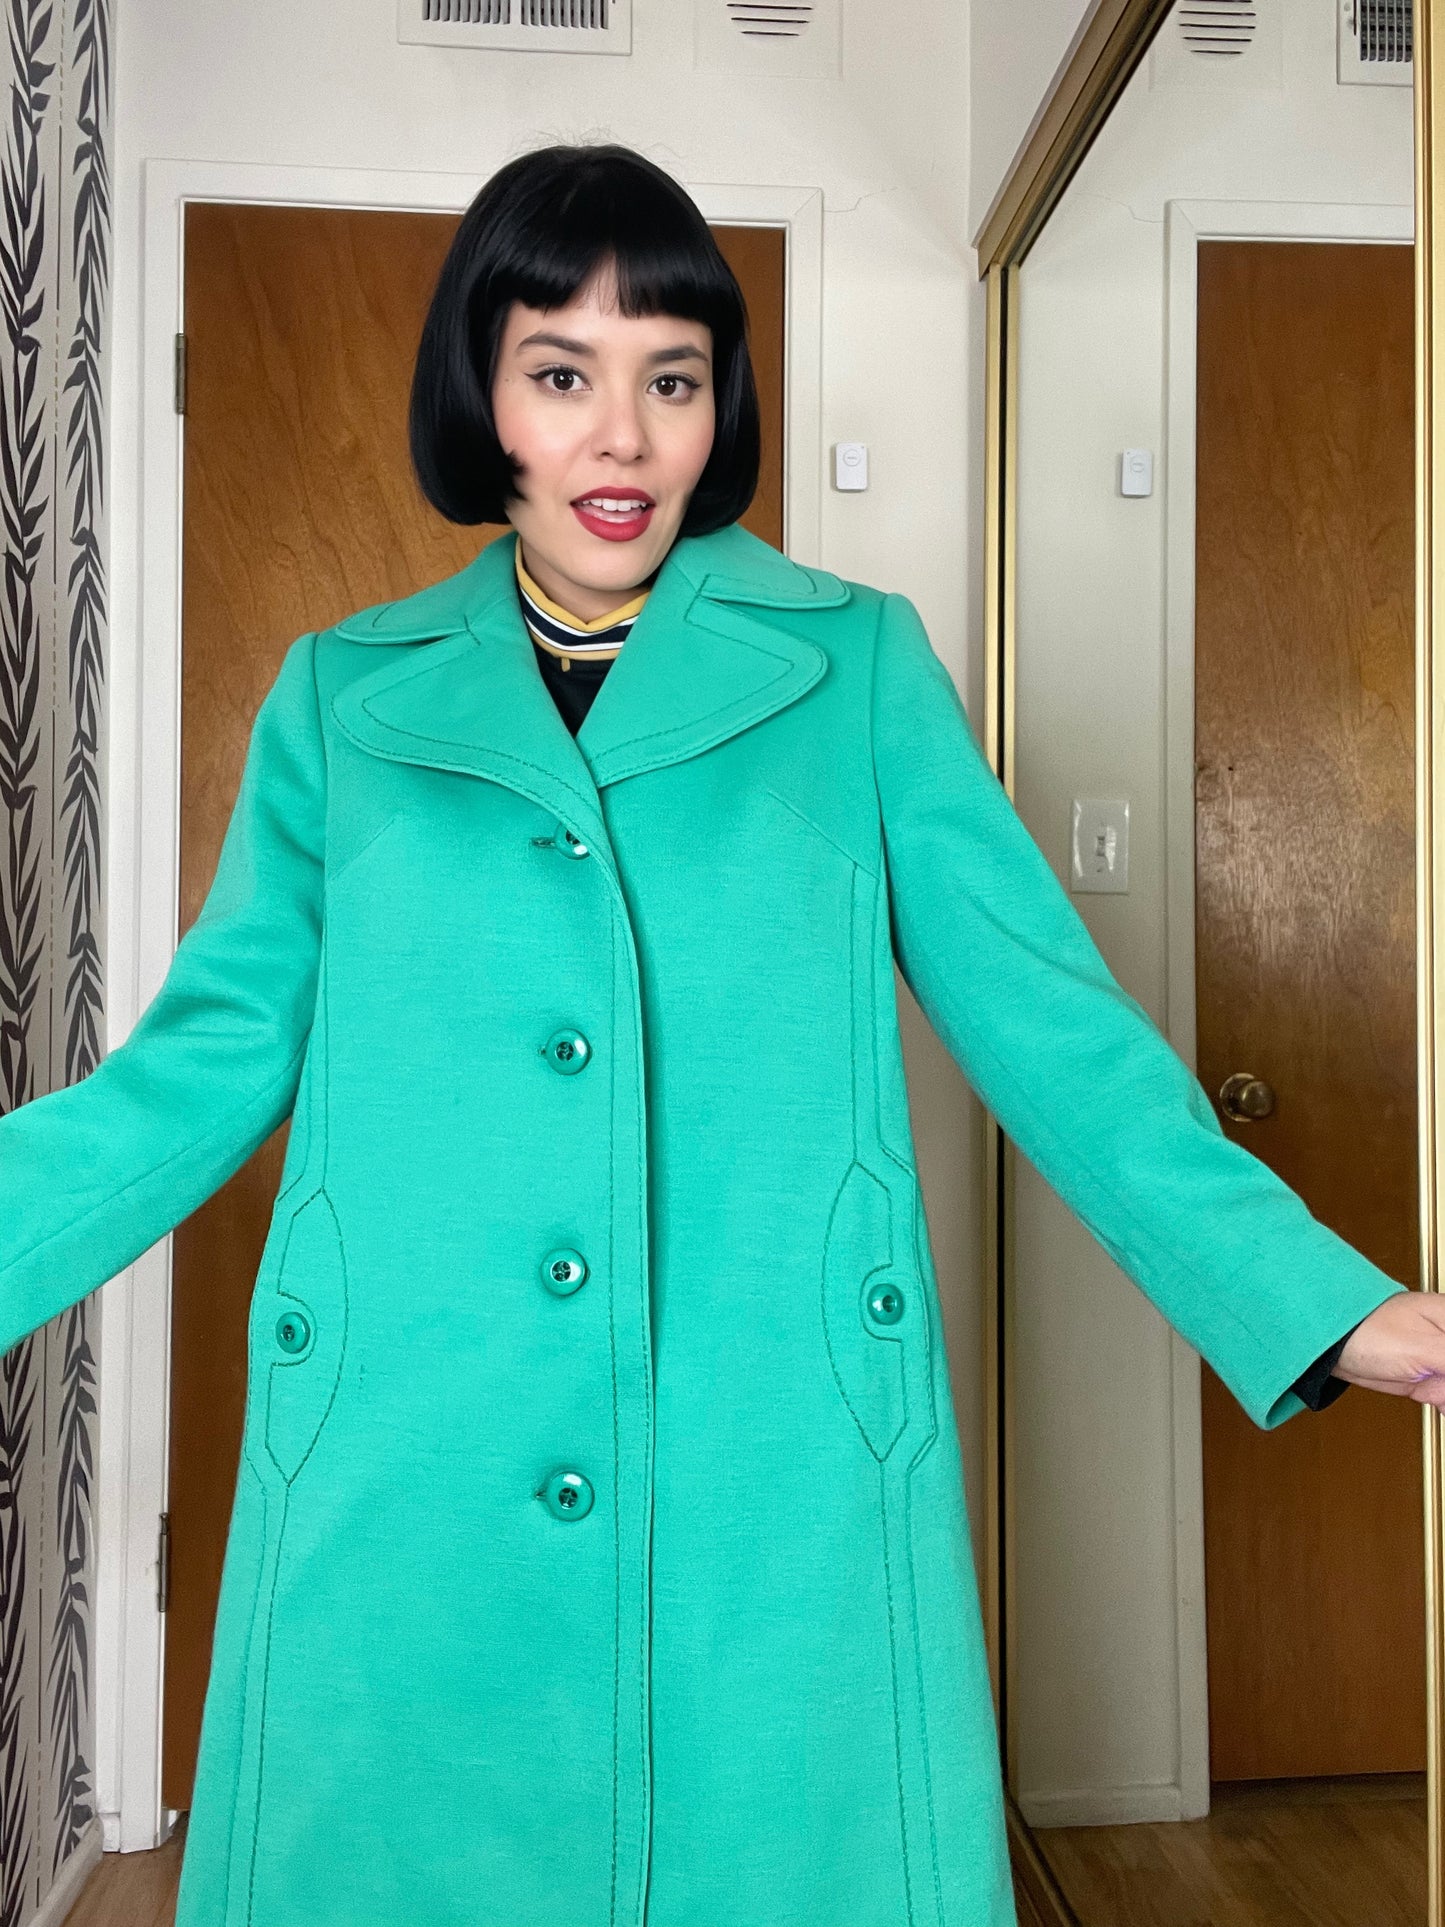 Vintage 60s "Your Sixth Sense" Mod Green Botton Down Soft Wool Coat Best Fits Sizes S-L